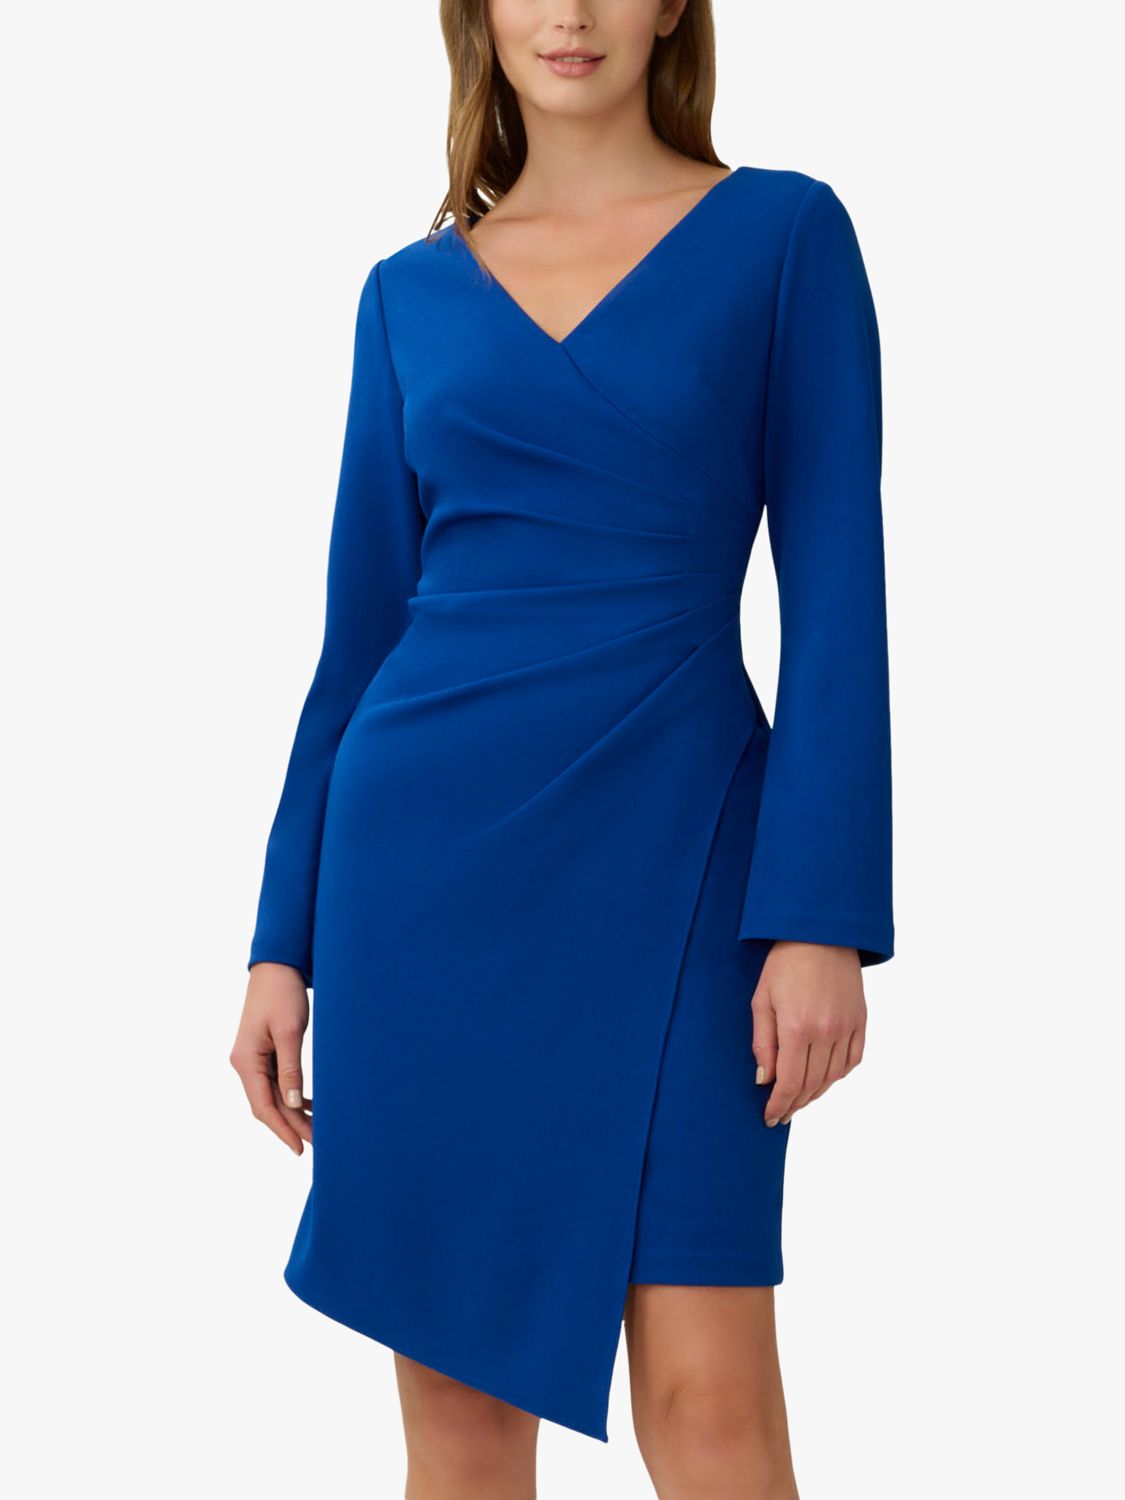 Adrianna Papell Draped Asymmetric Hem Dress, Dynasty Blue